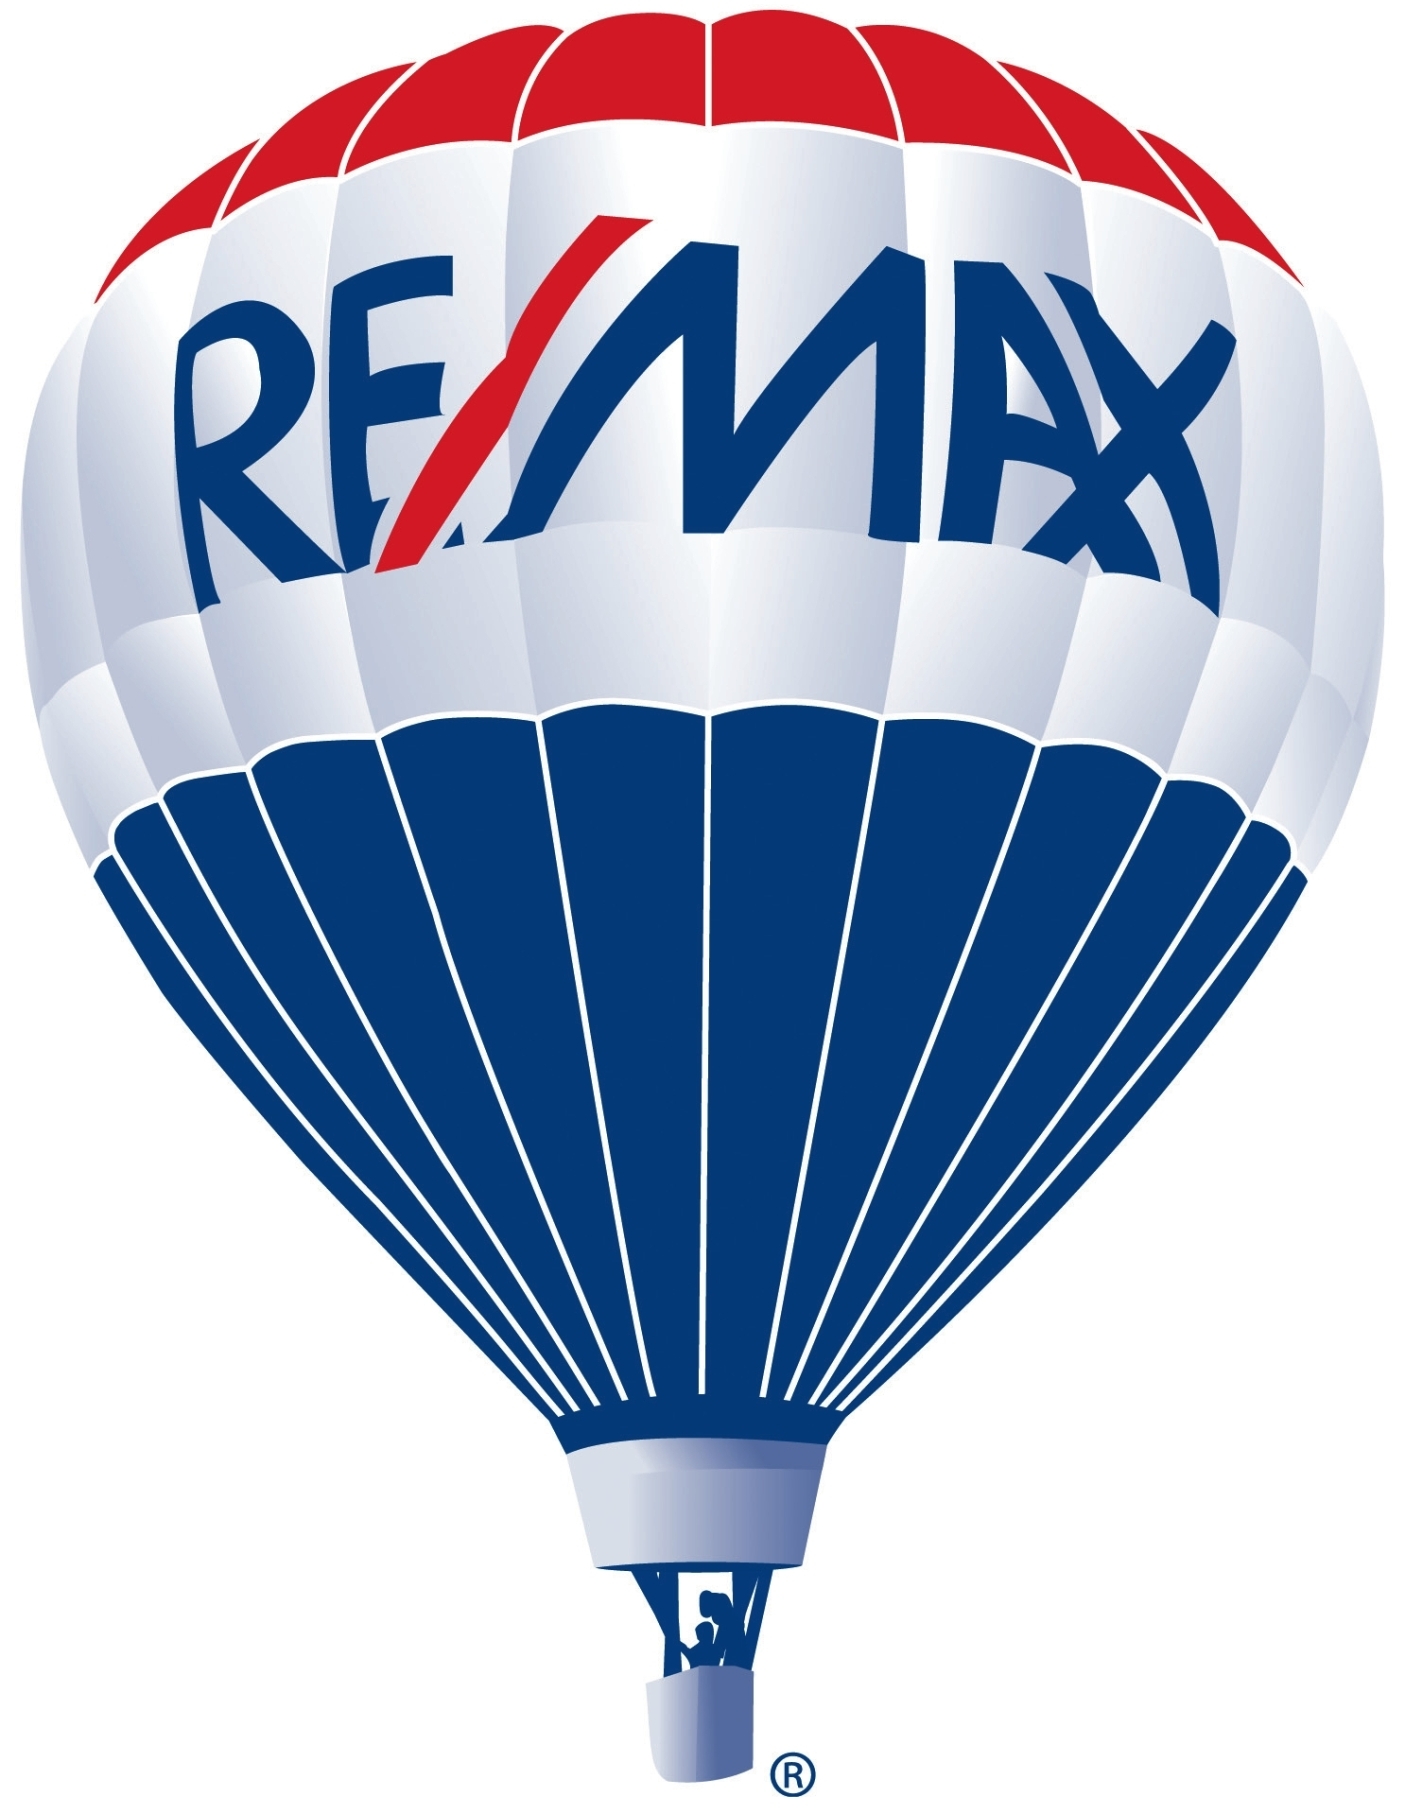 Remax balloon